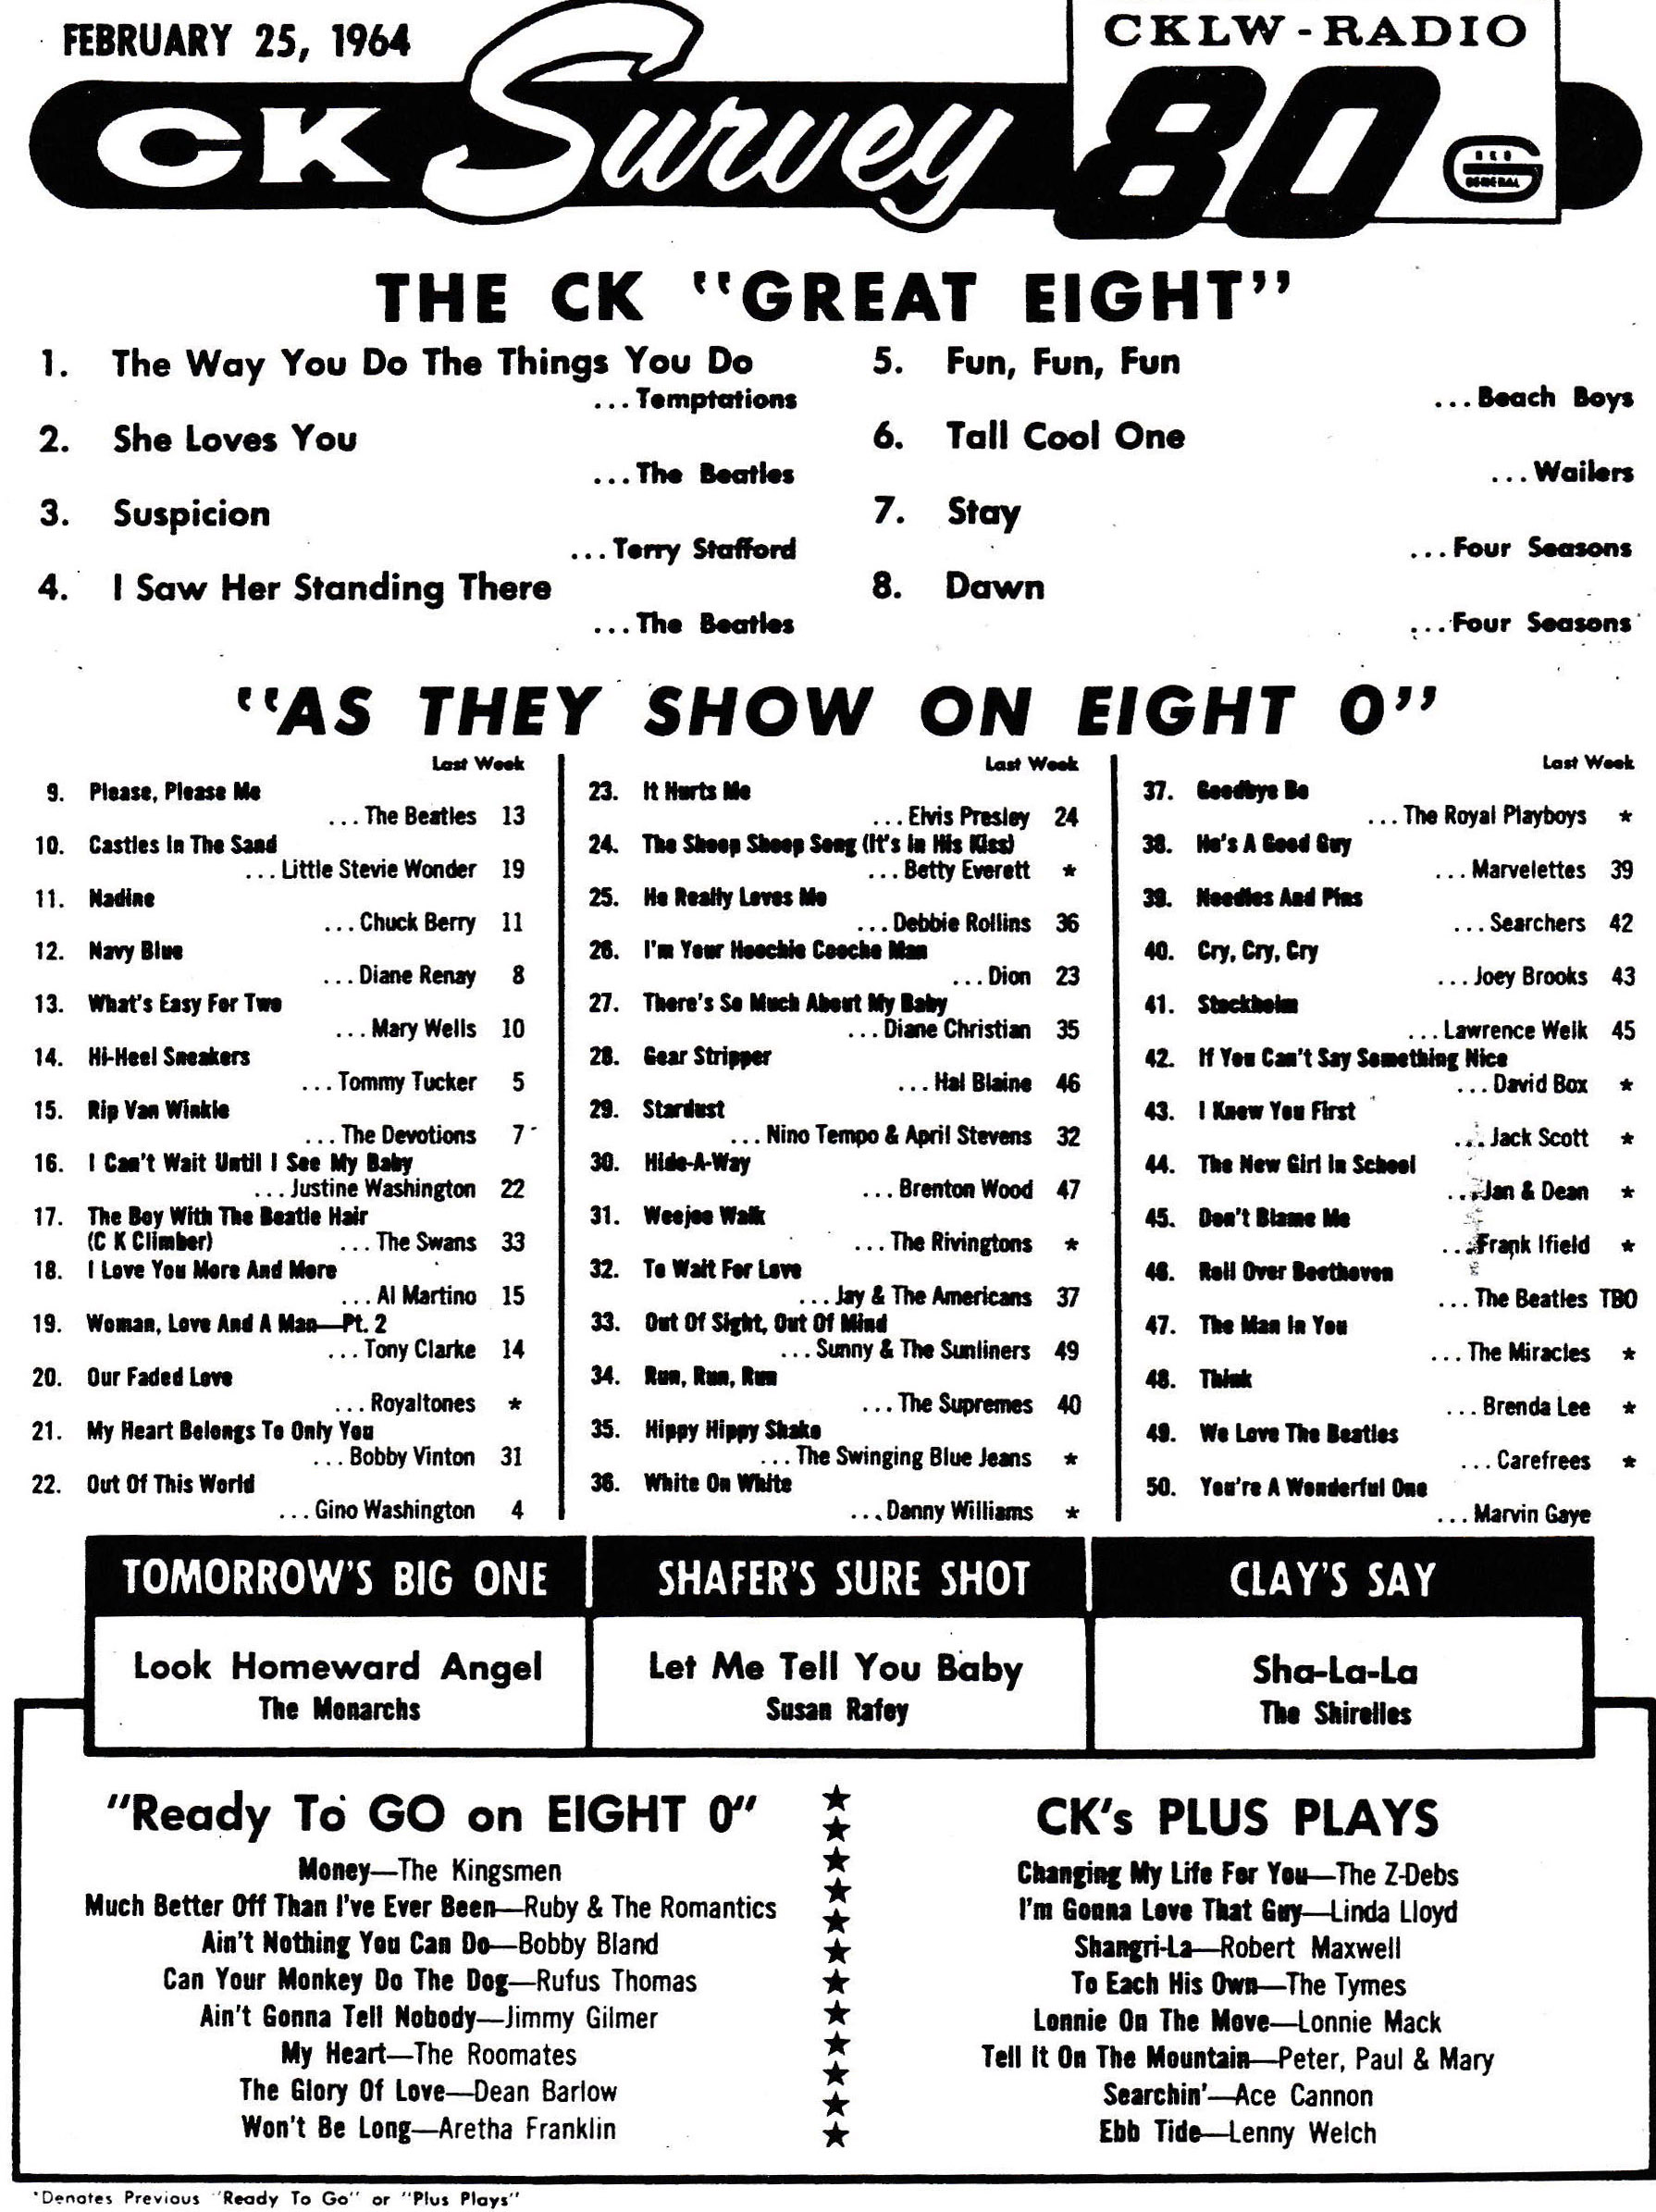 CKLW - February 25, 1964